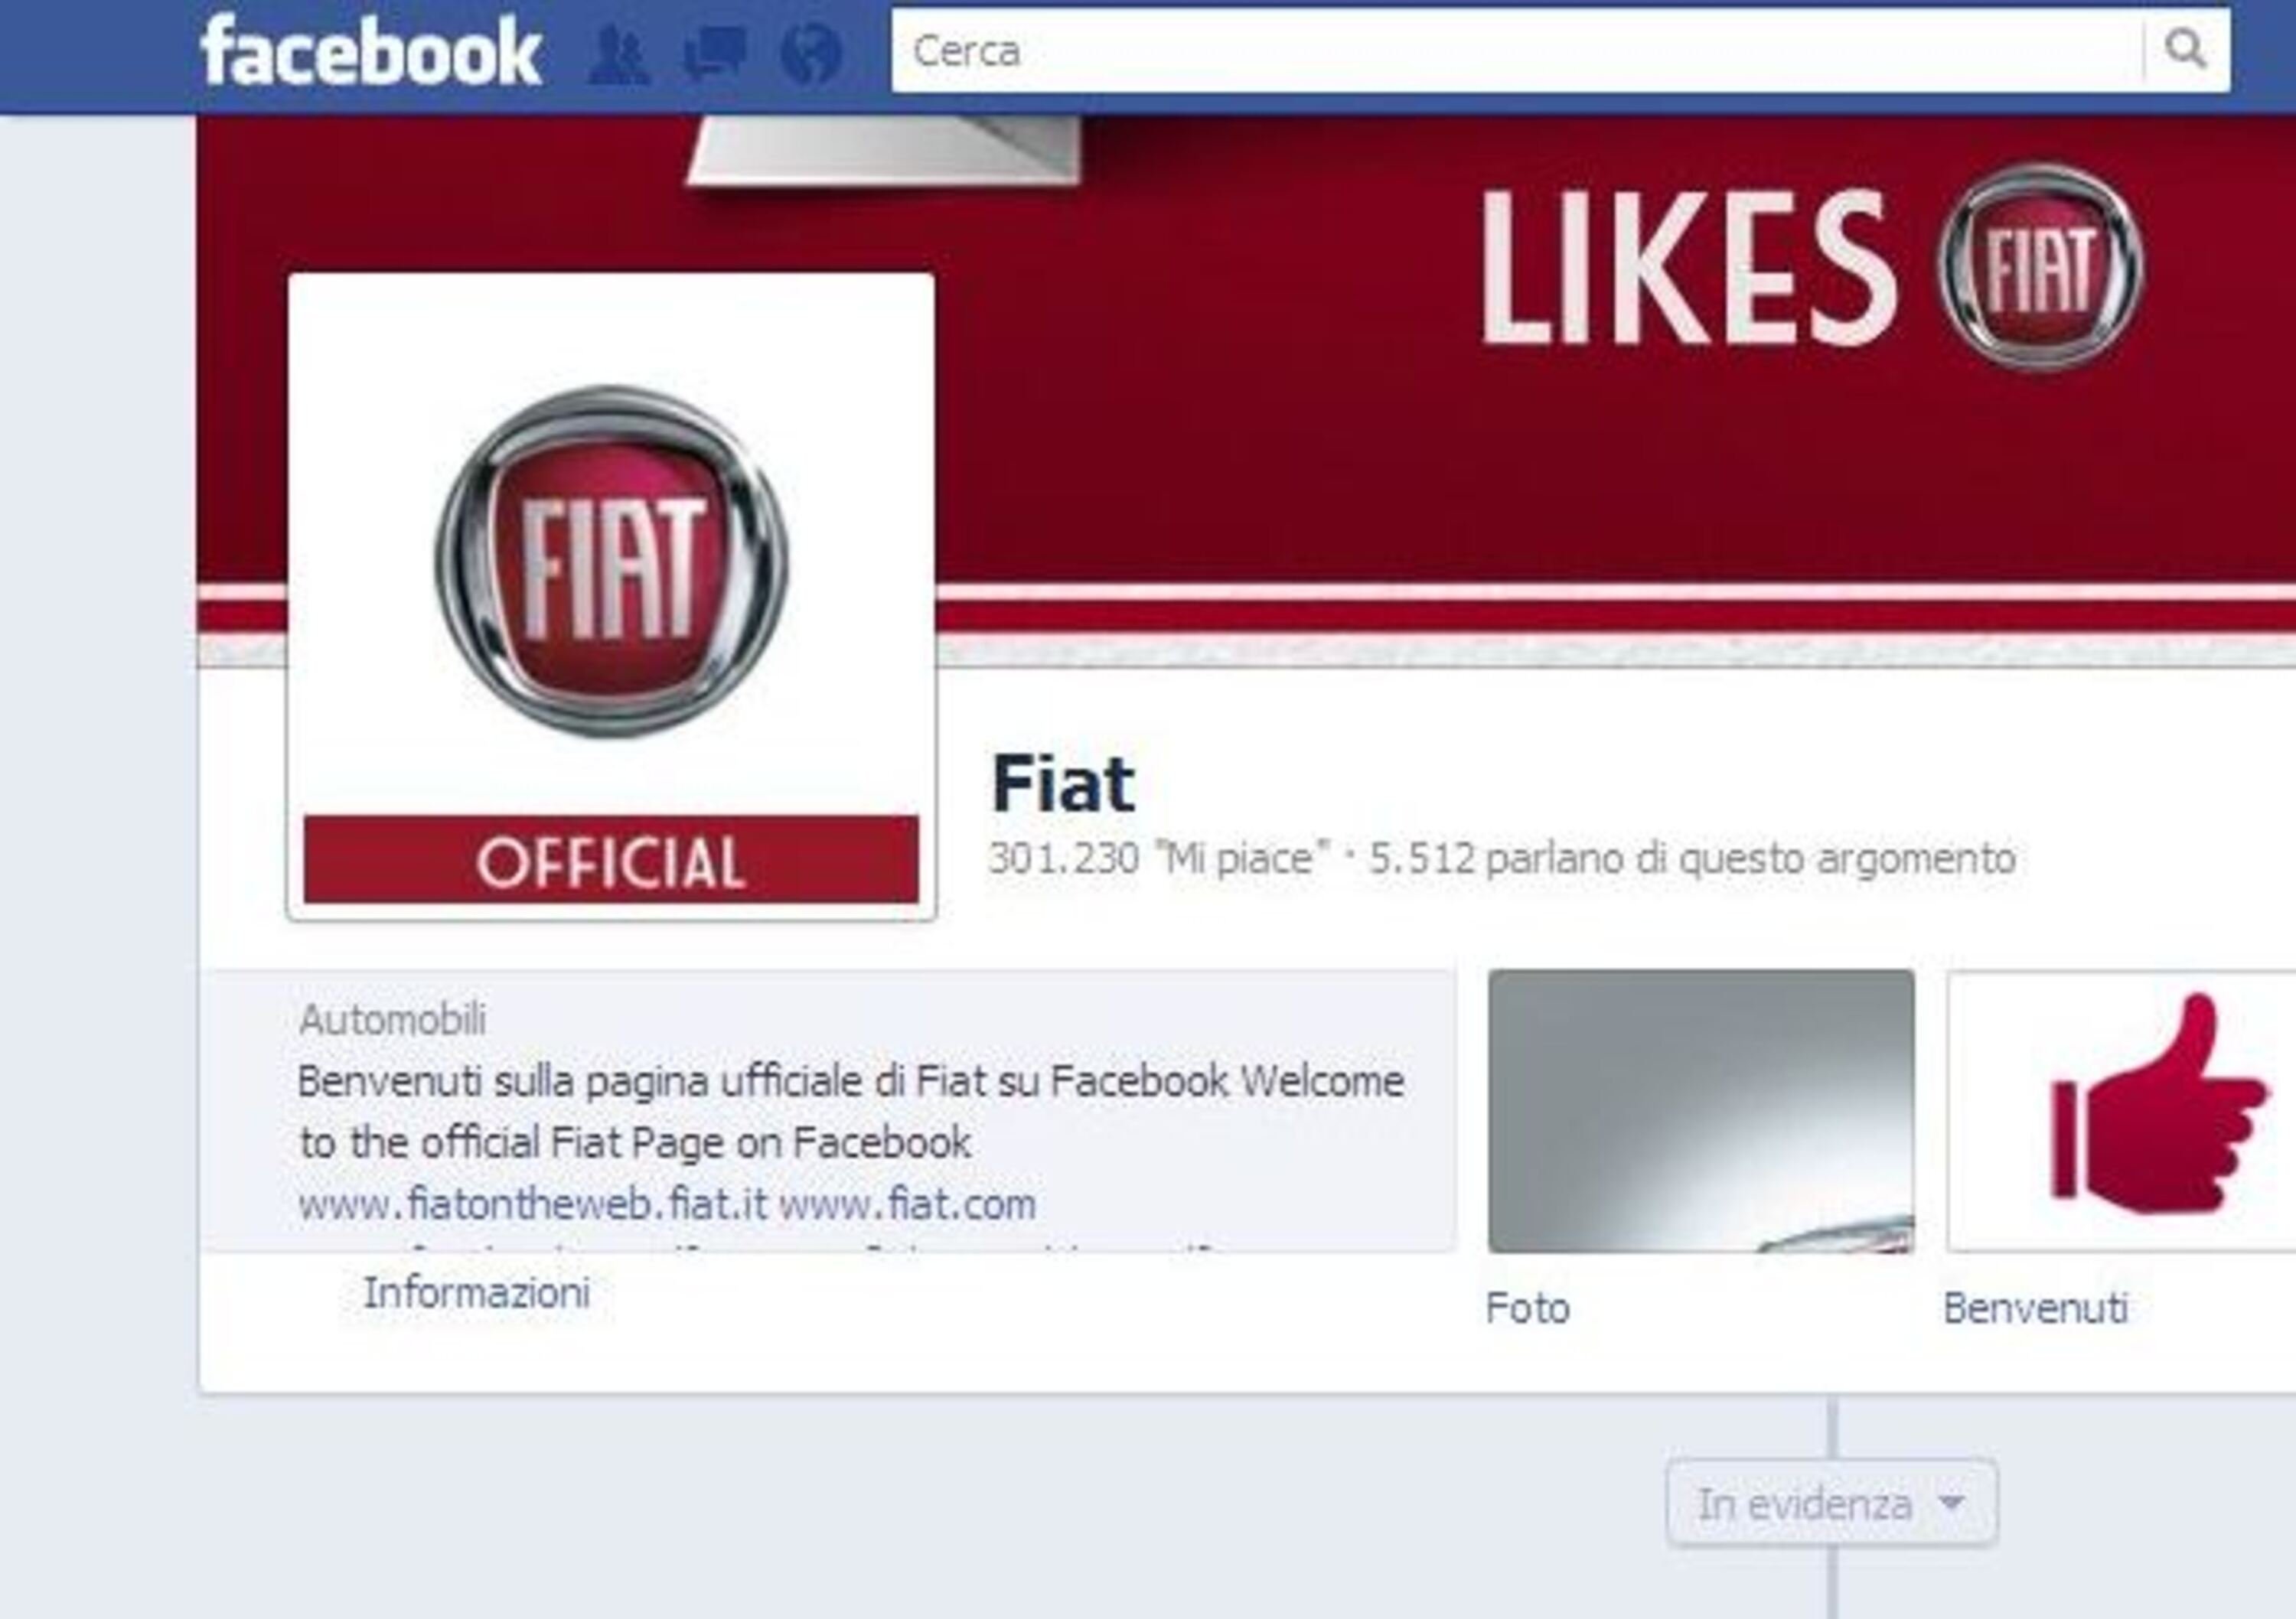 Fiat raggiunge 300.000 like su Facebook